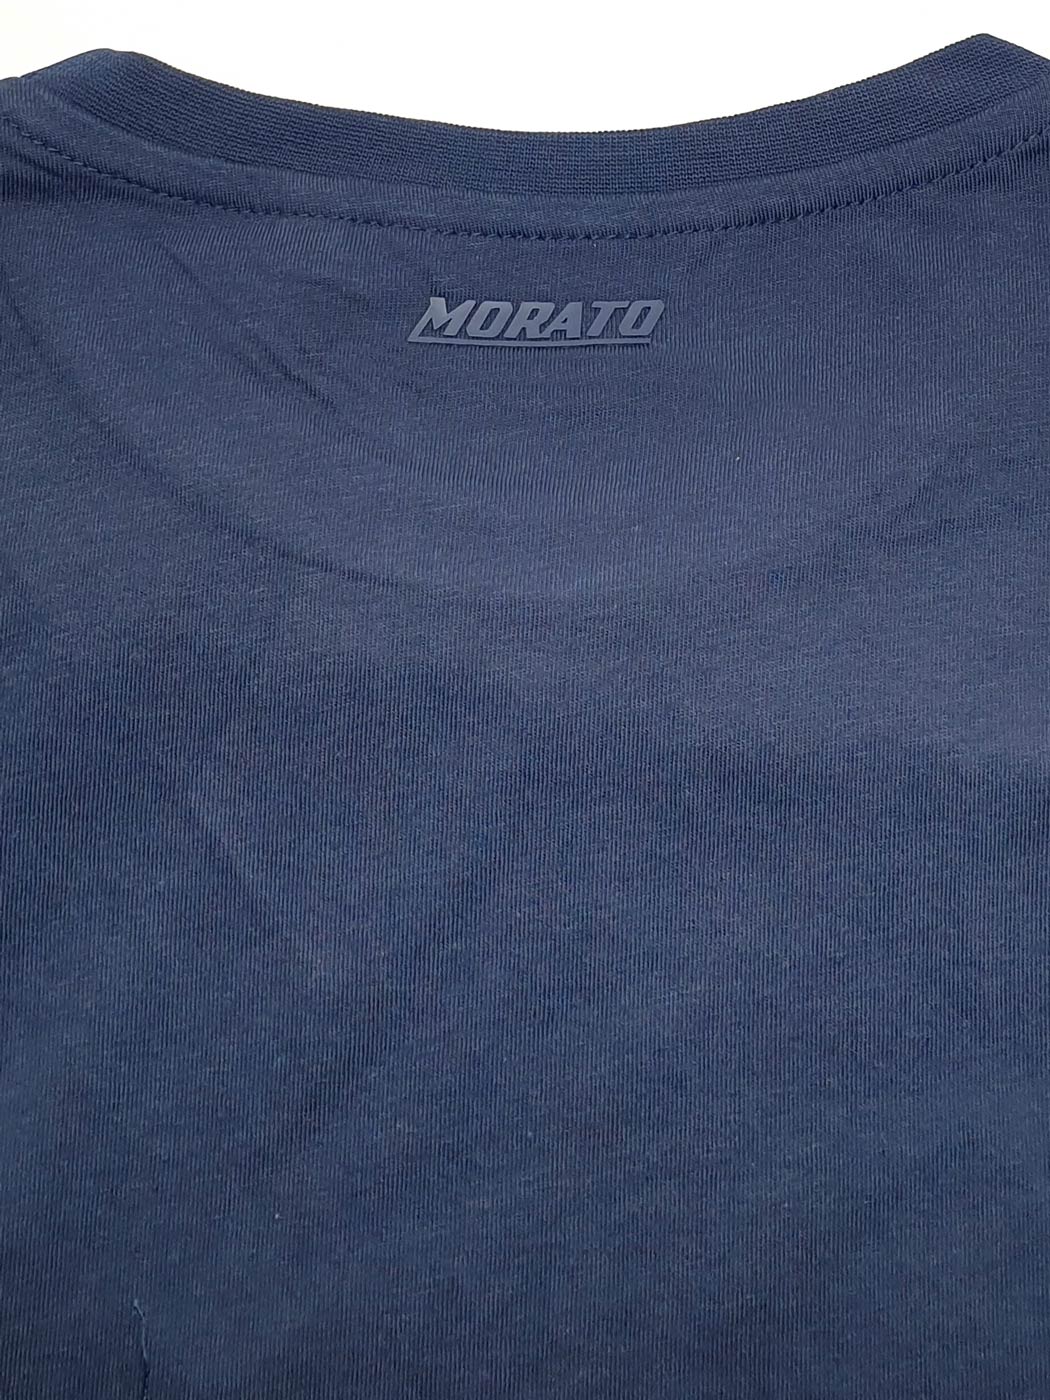 Antony Morato cotton t-shirt with shark print-blue